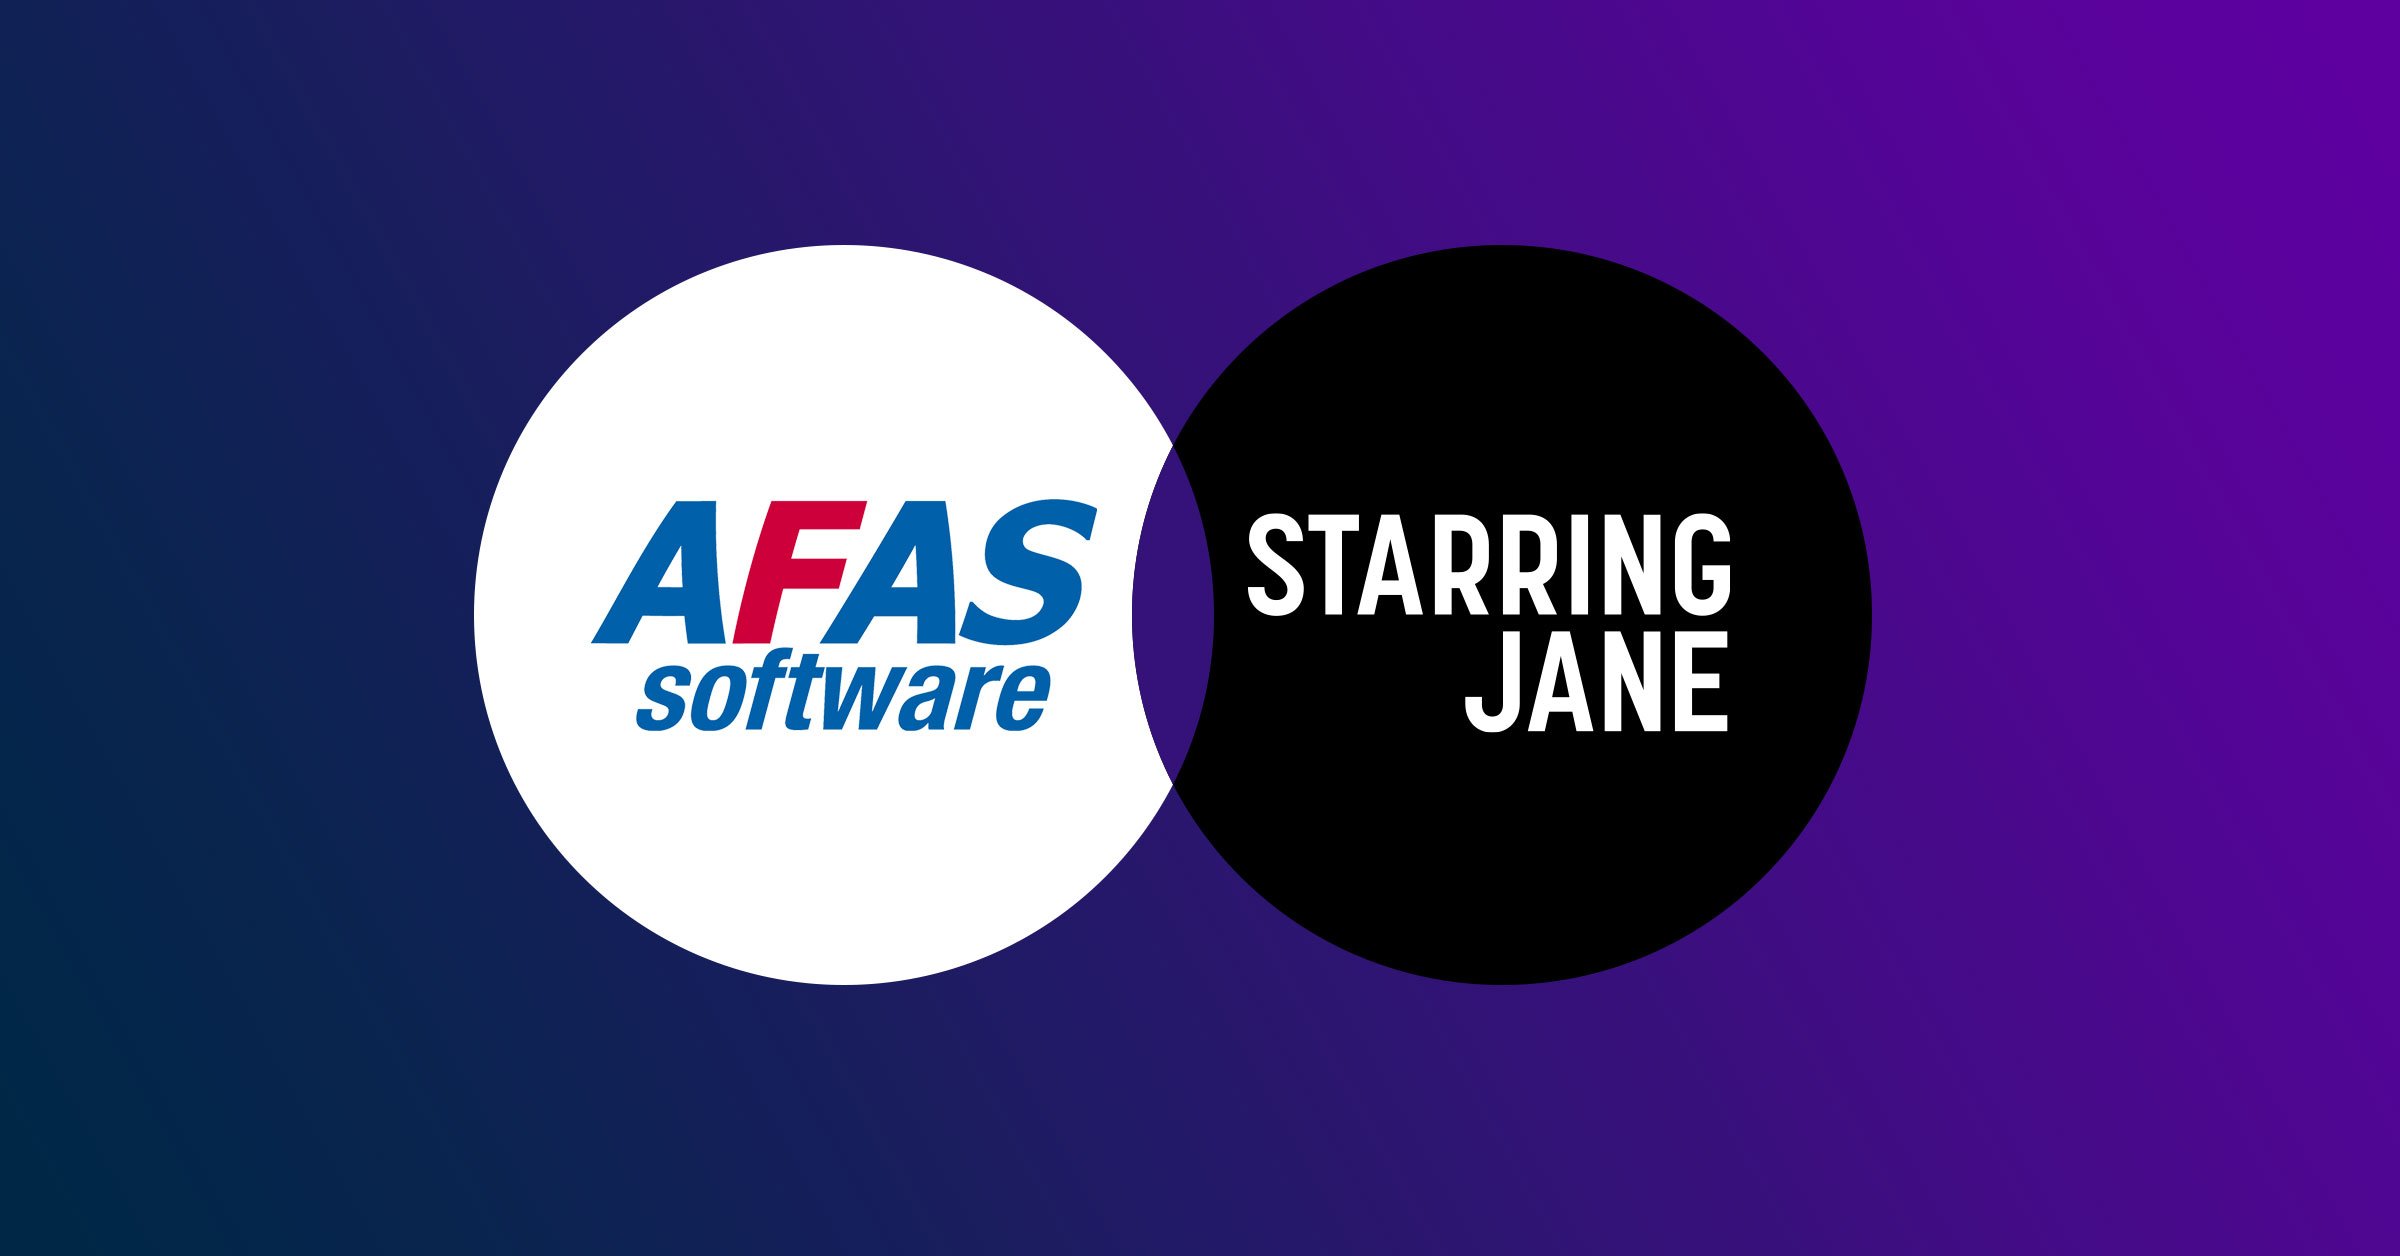 Afas software en Starring Jane